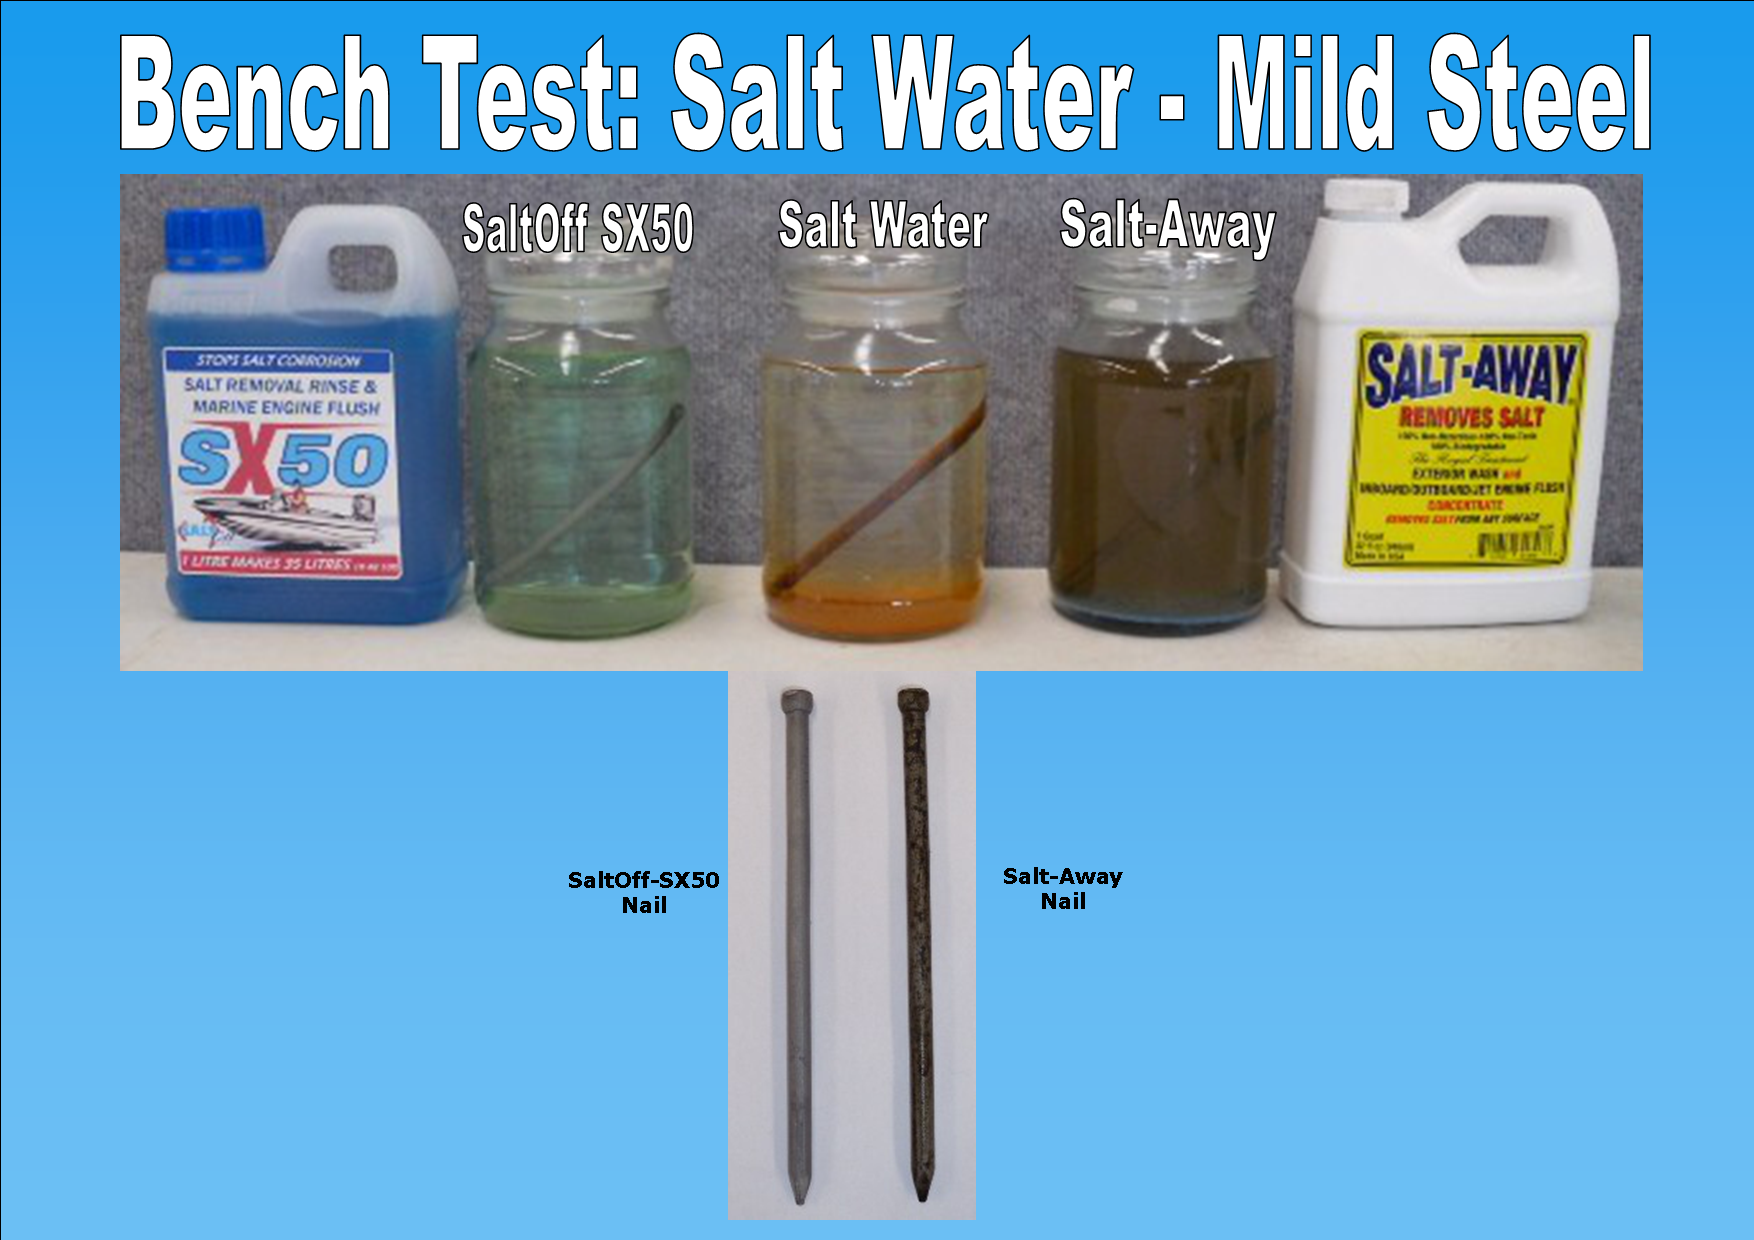 Salt Away performs badly in Salt Corrosion Test